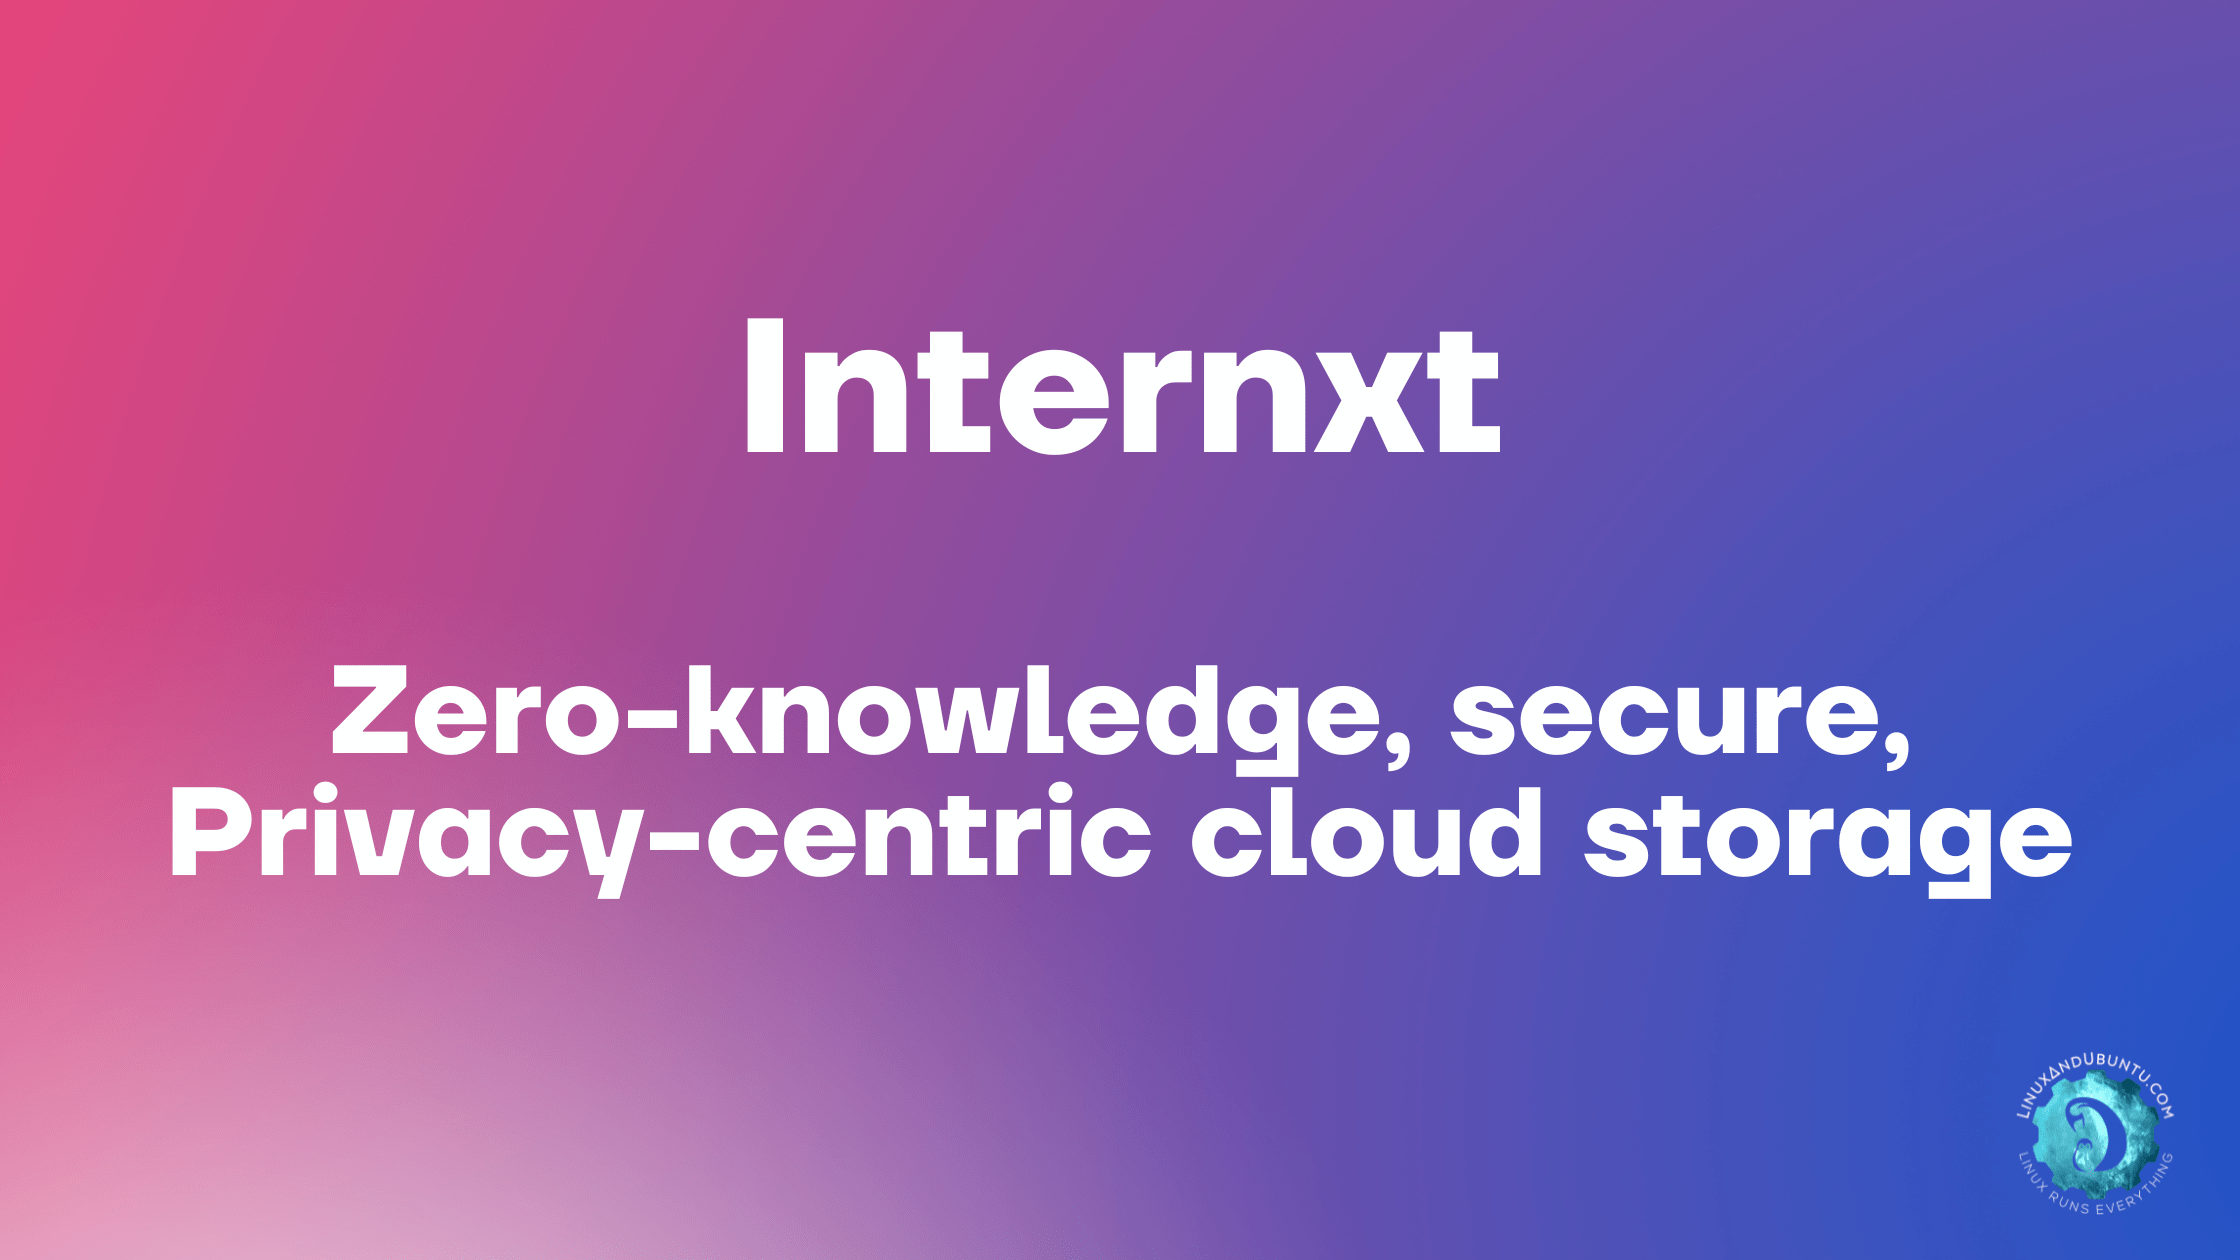 Internxt zero knowledge cloud storage